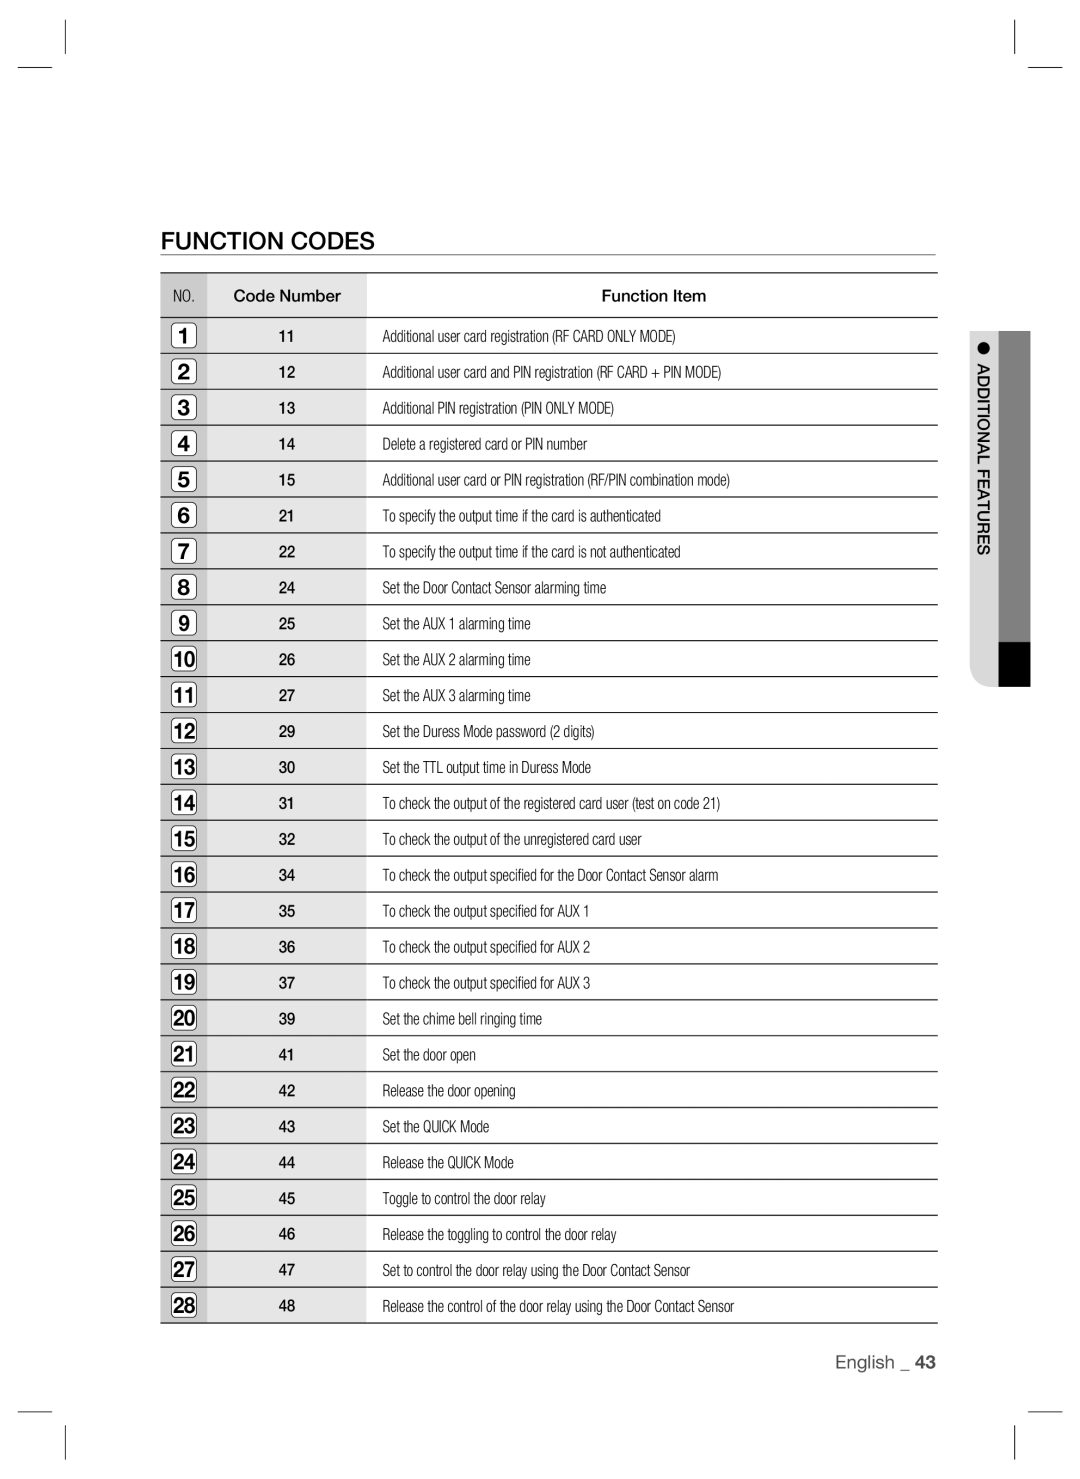 Samsung SSA-S2000W user manual Function Codes, English _ 